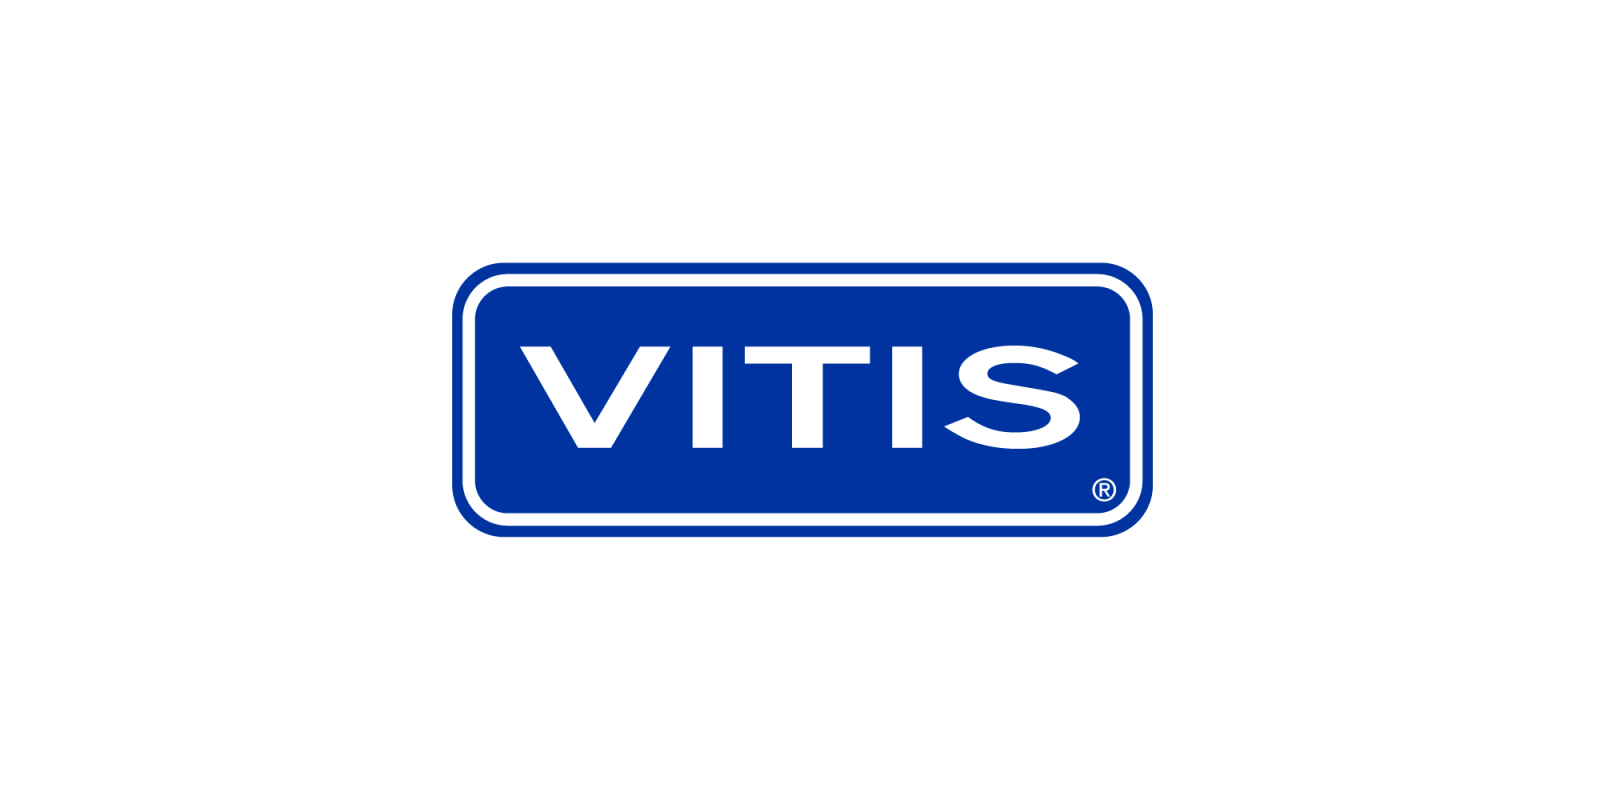 Vitis